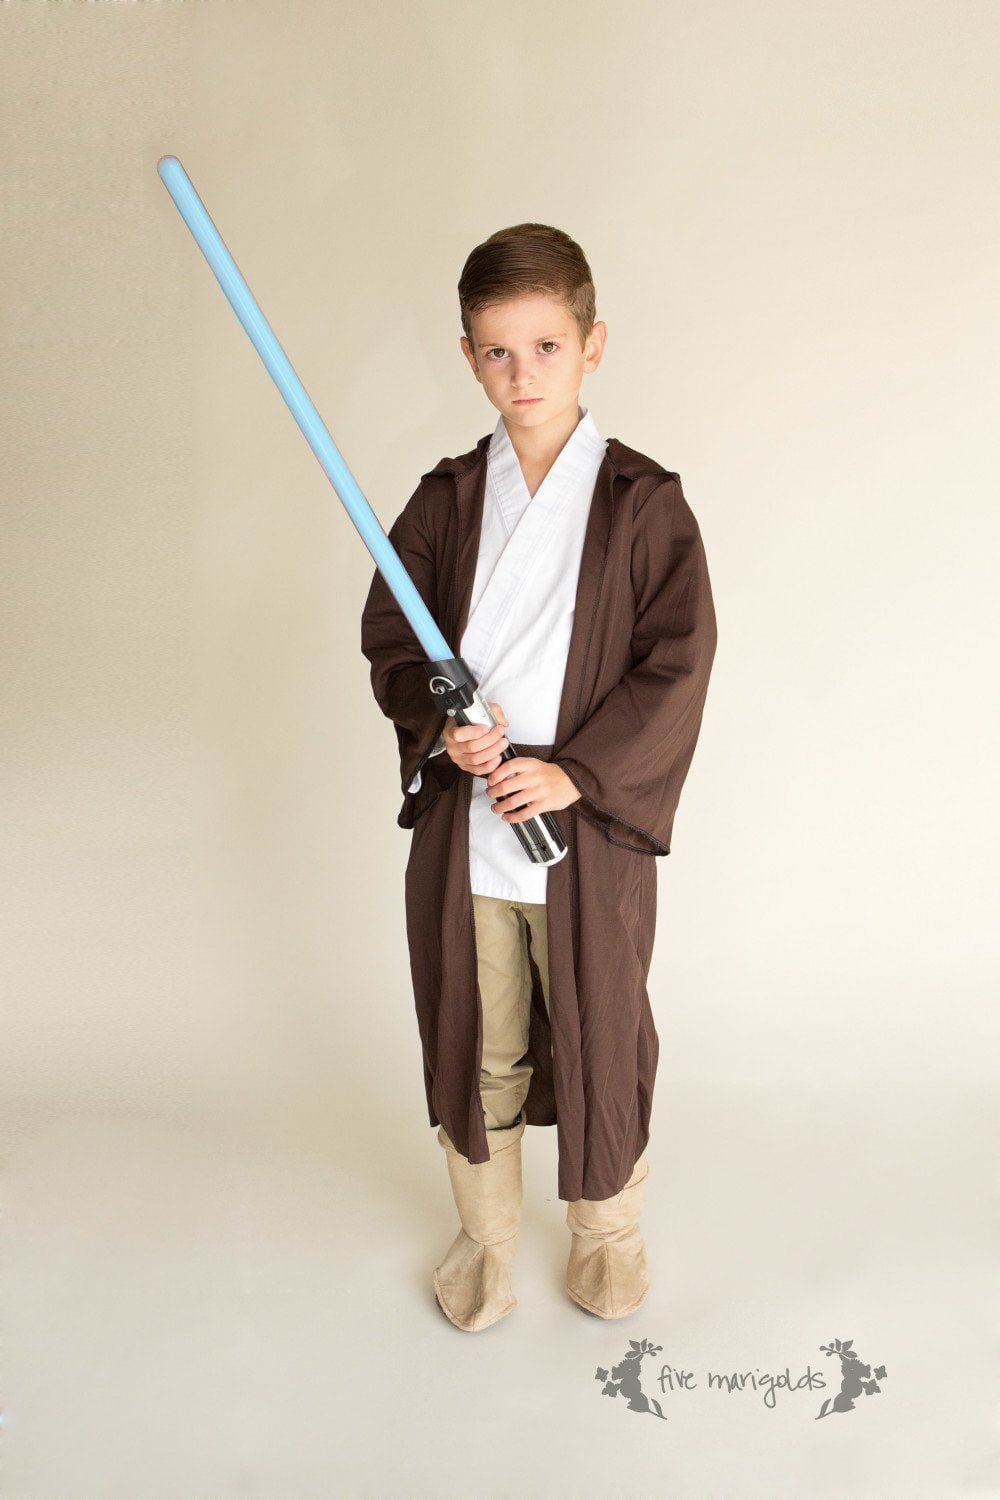 Shop Your Kids' Closet for Halloween Costumes | Jedi Luke SkyWalker Star Wars | Five Marigolds